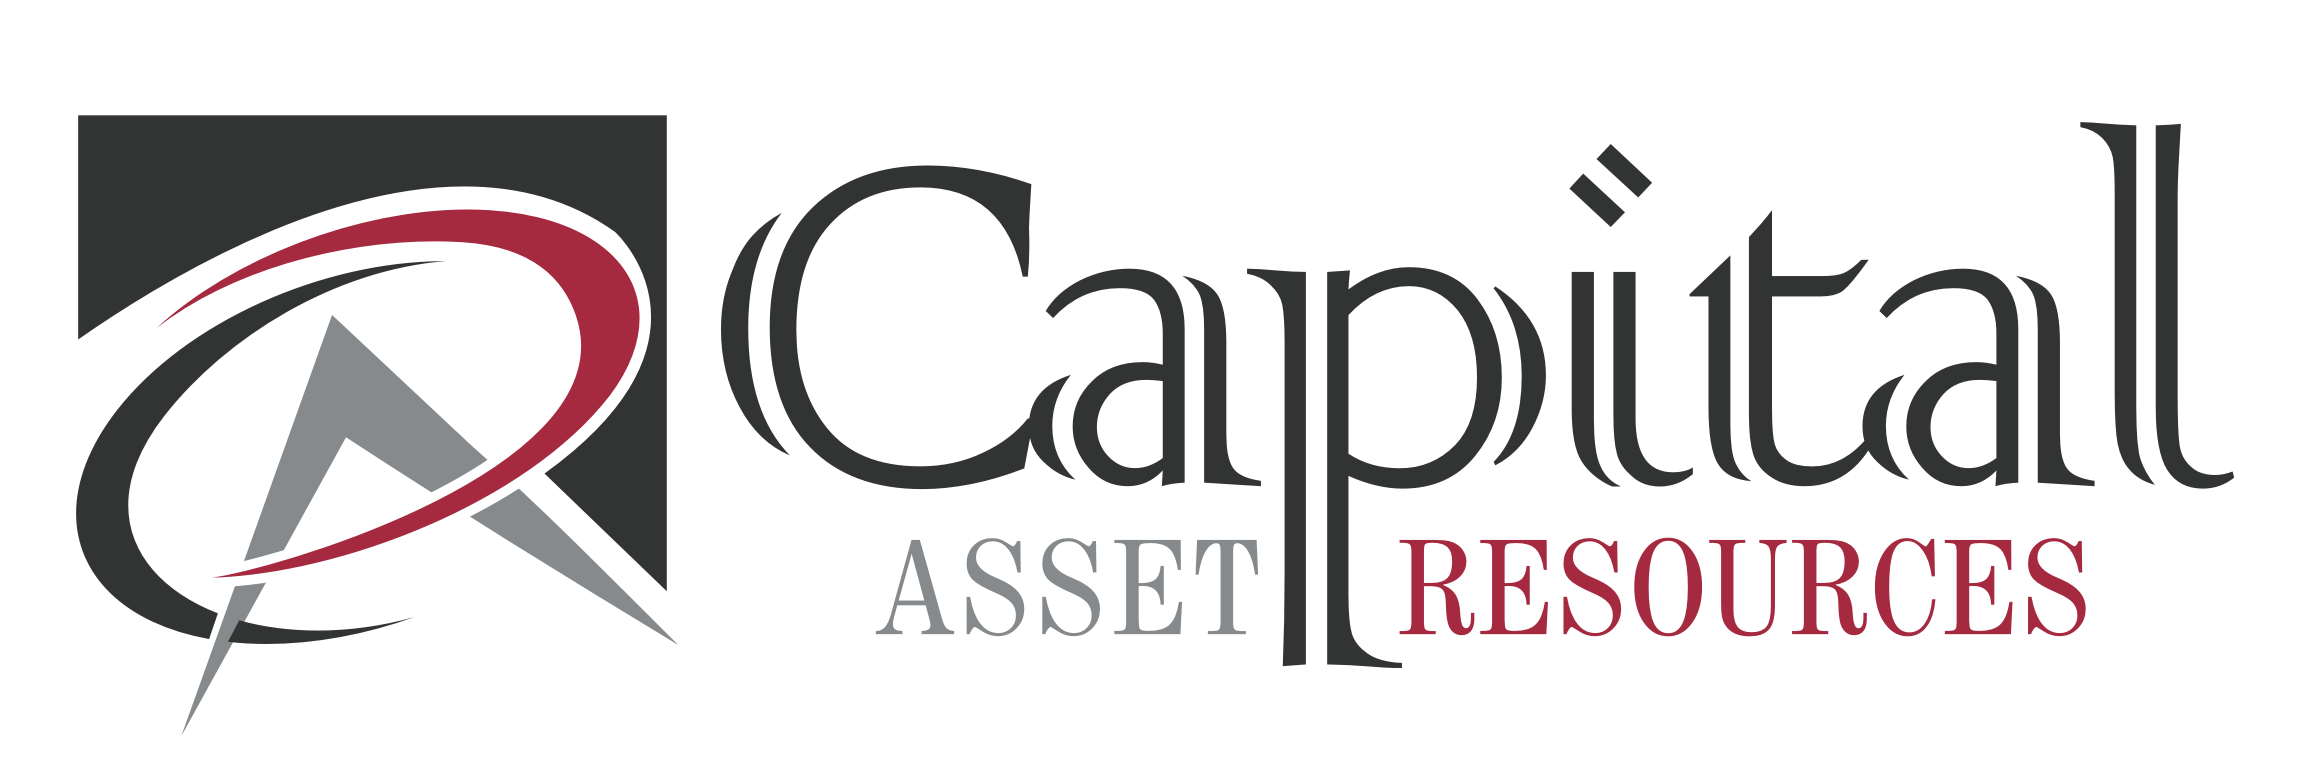 Capital Asset Resources